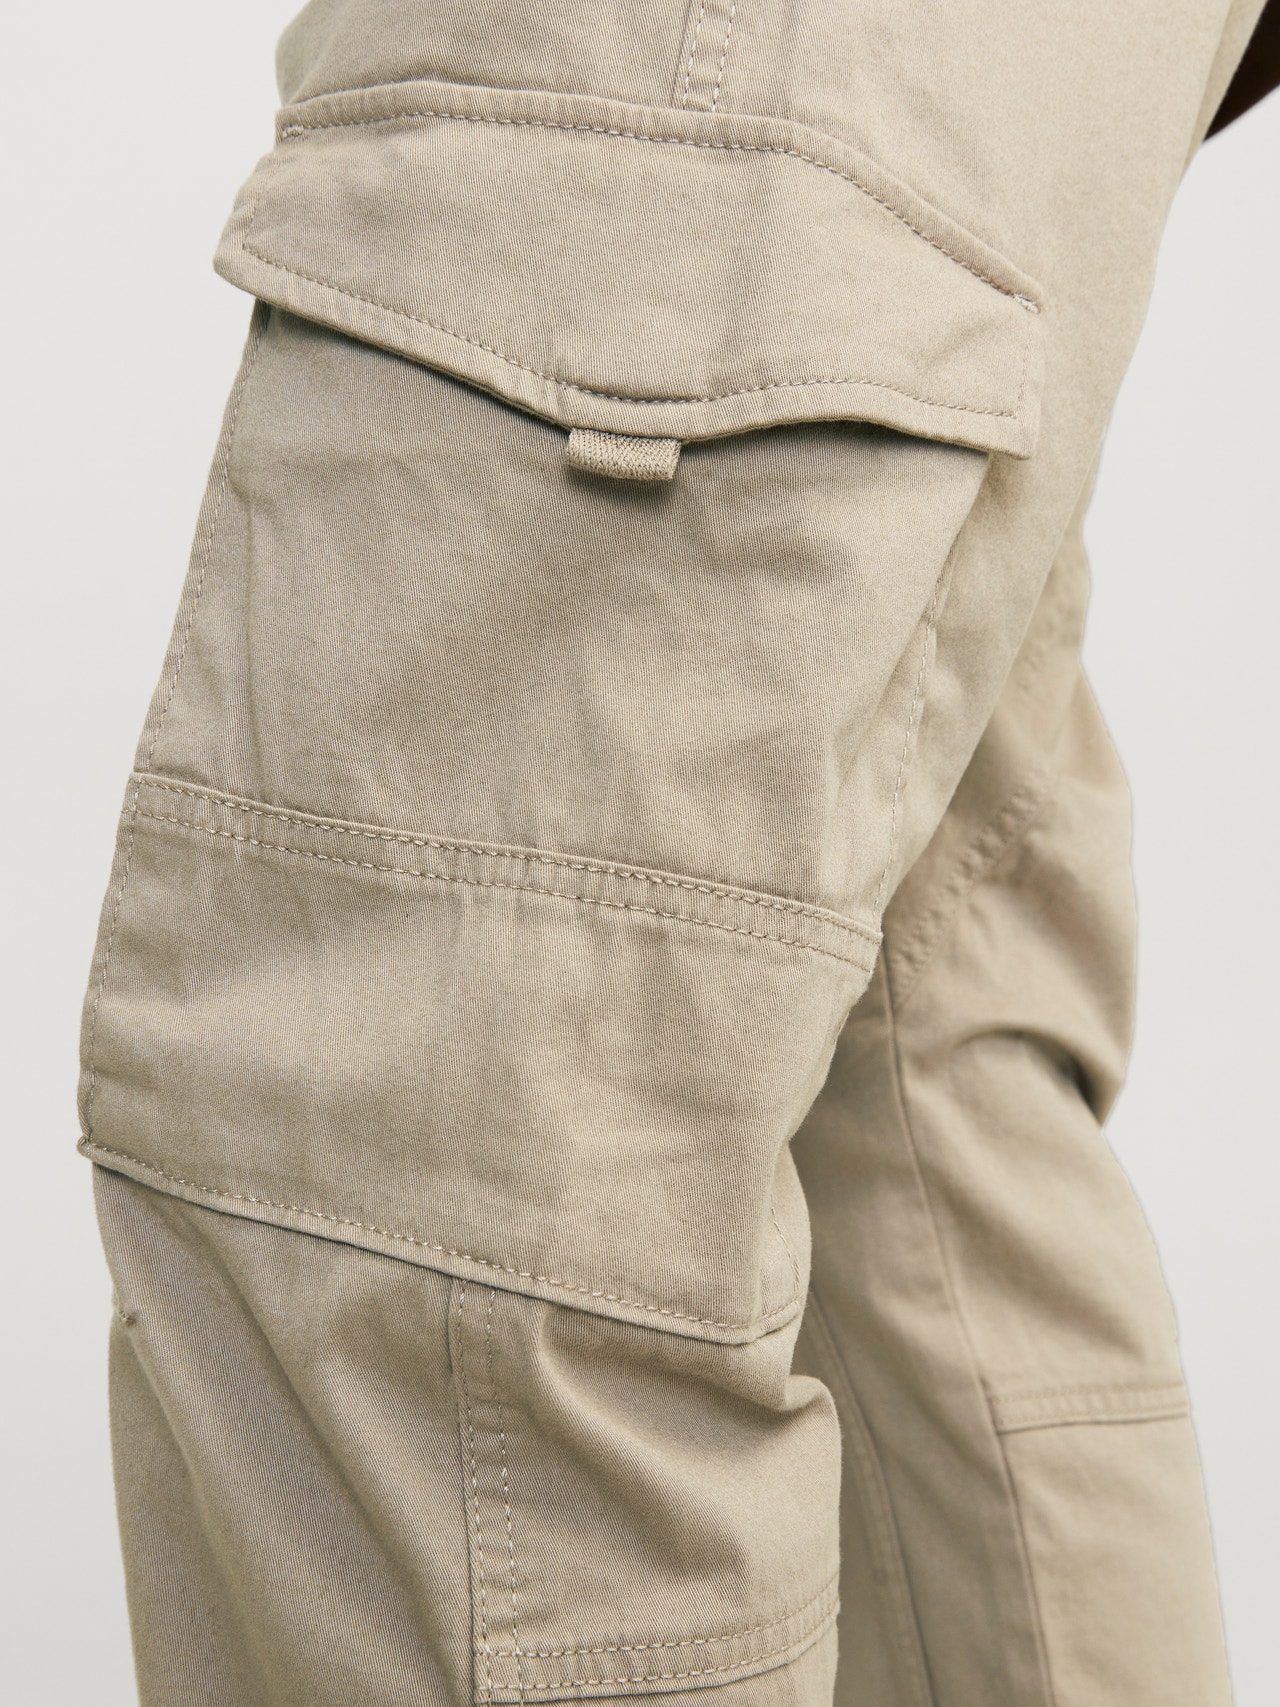 Jack & Jones Pantalon cargo Slim Fit -Crockery - 12193754